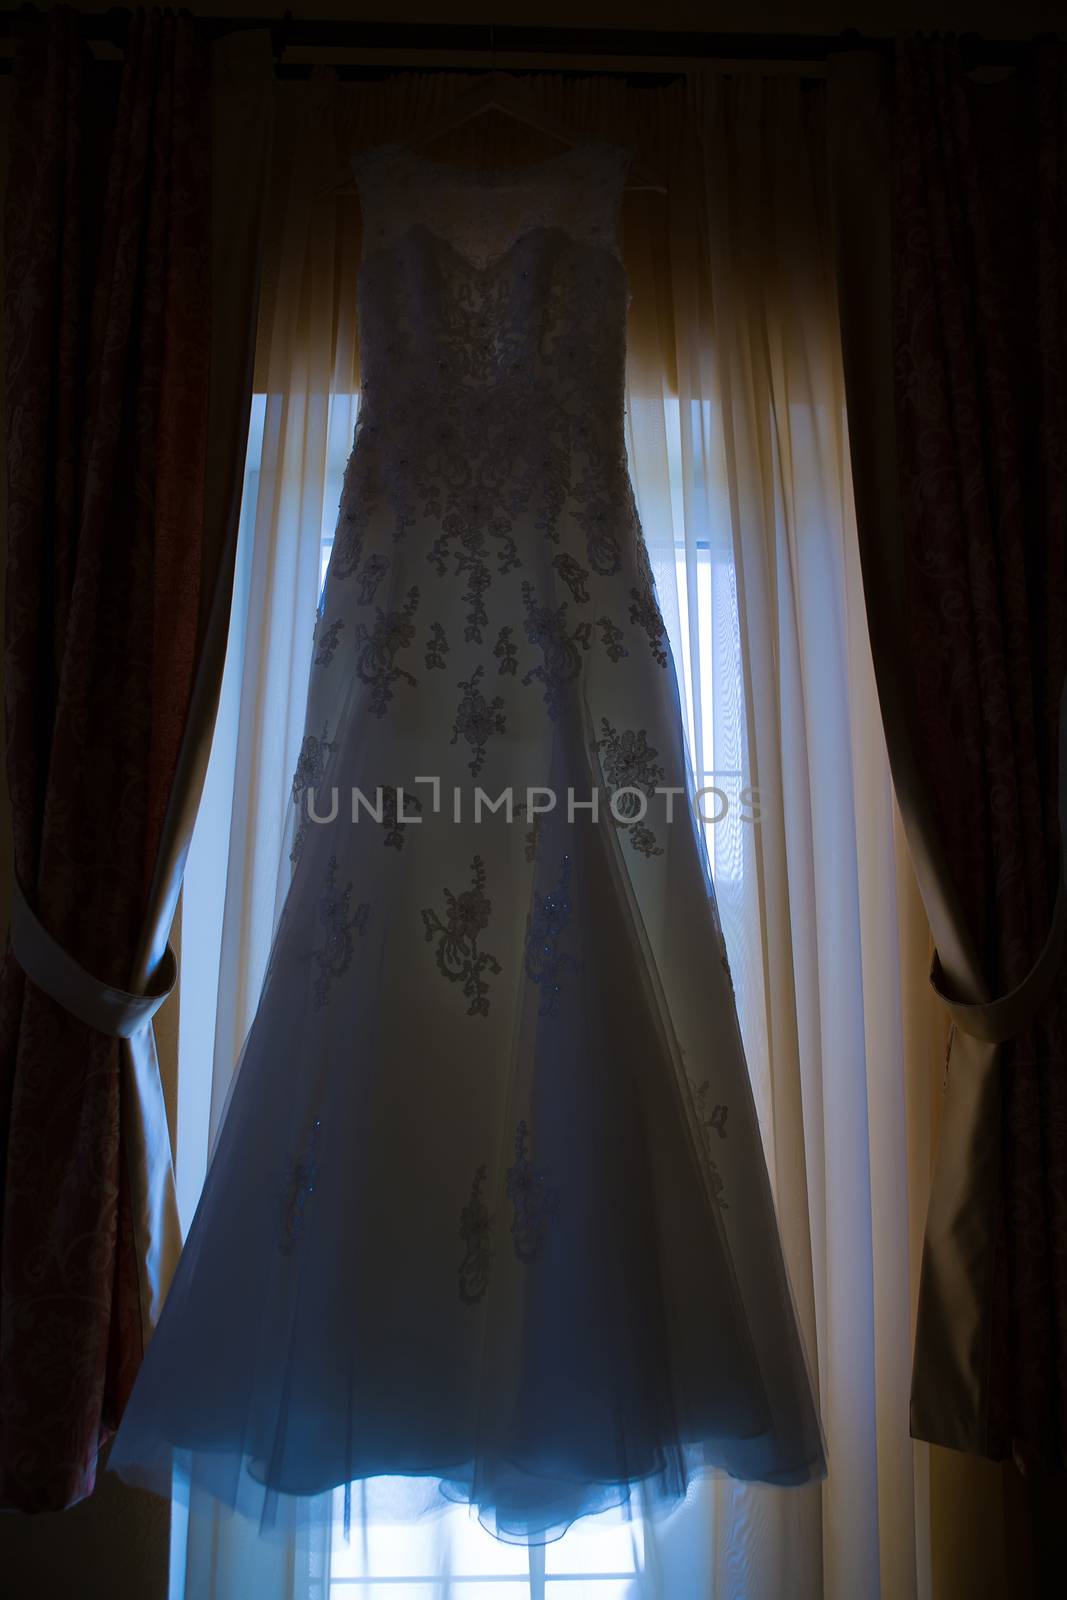 wedding dress hanging on window at hotel room